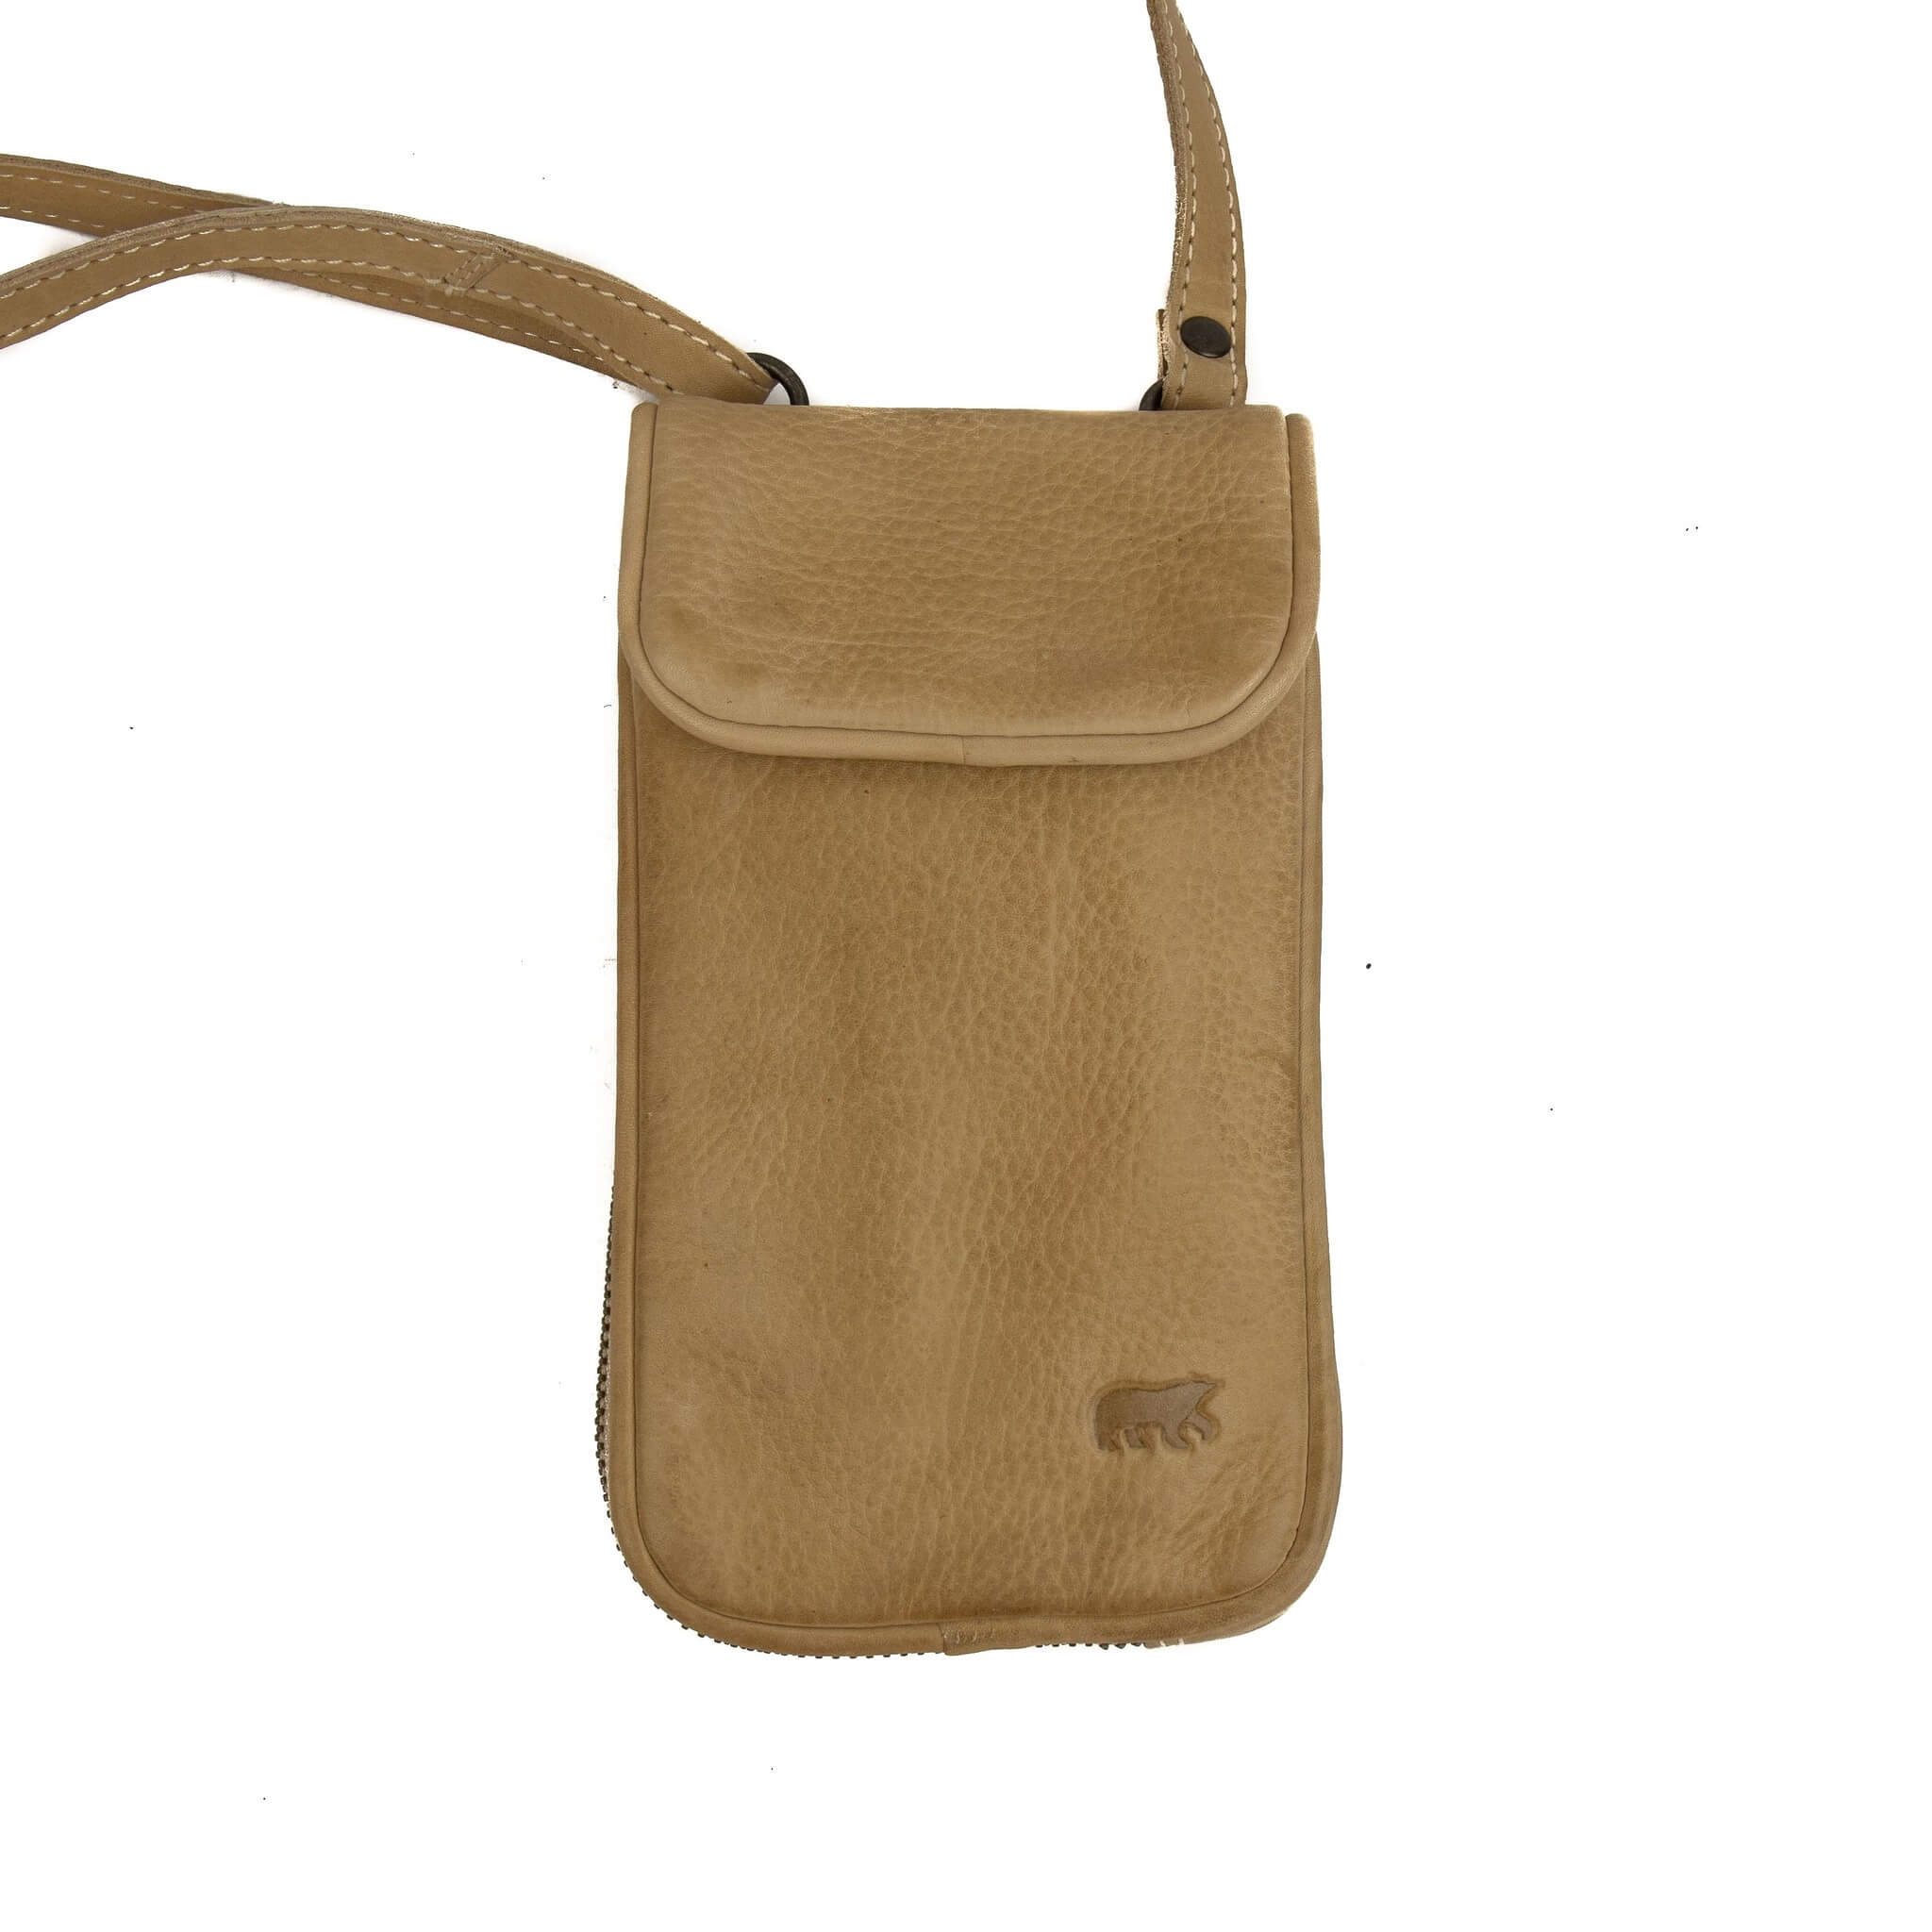 Bear Design Phone Bag Elske Telefoontasje Baltic Beige